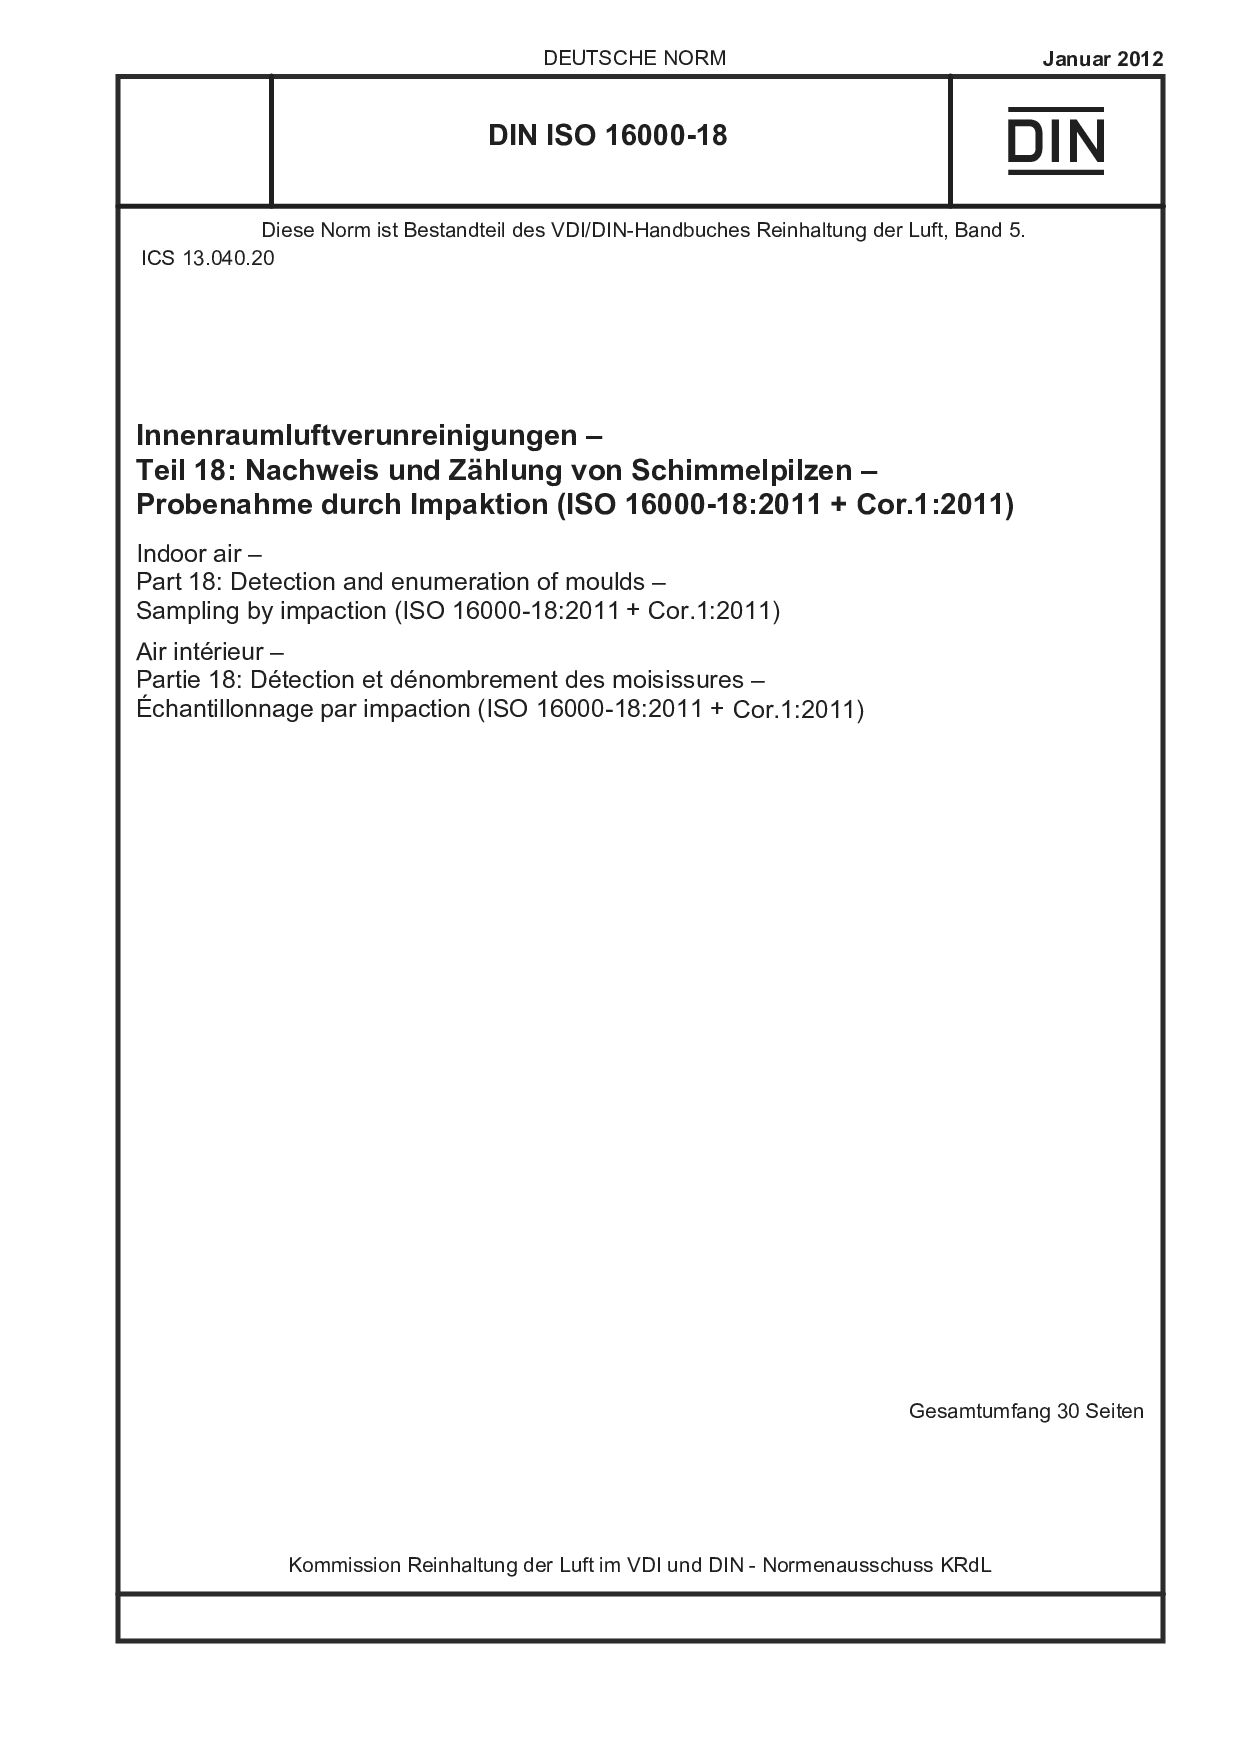 DIN ISO 16000-18:2012